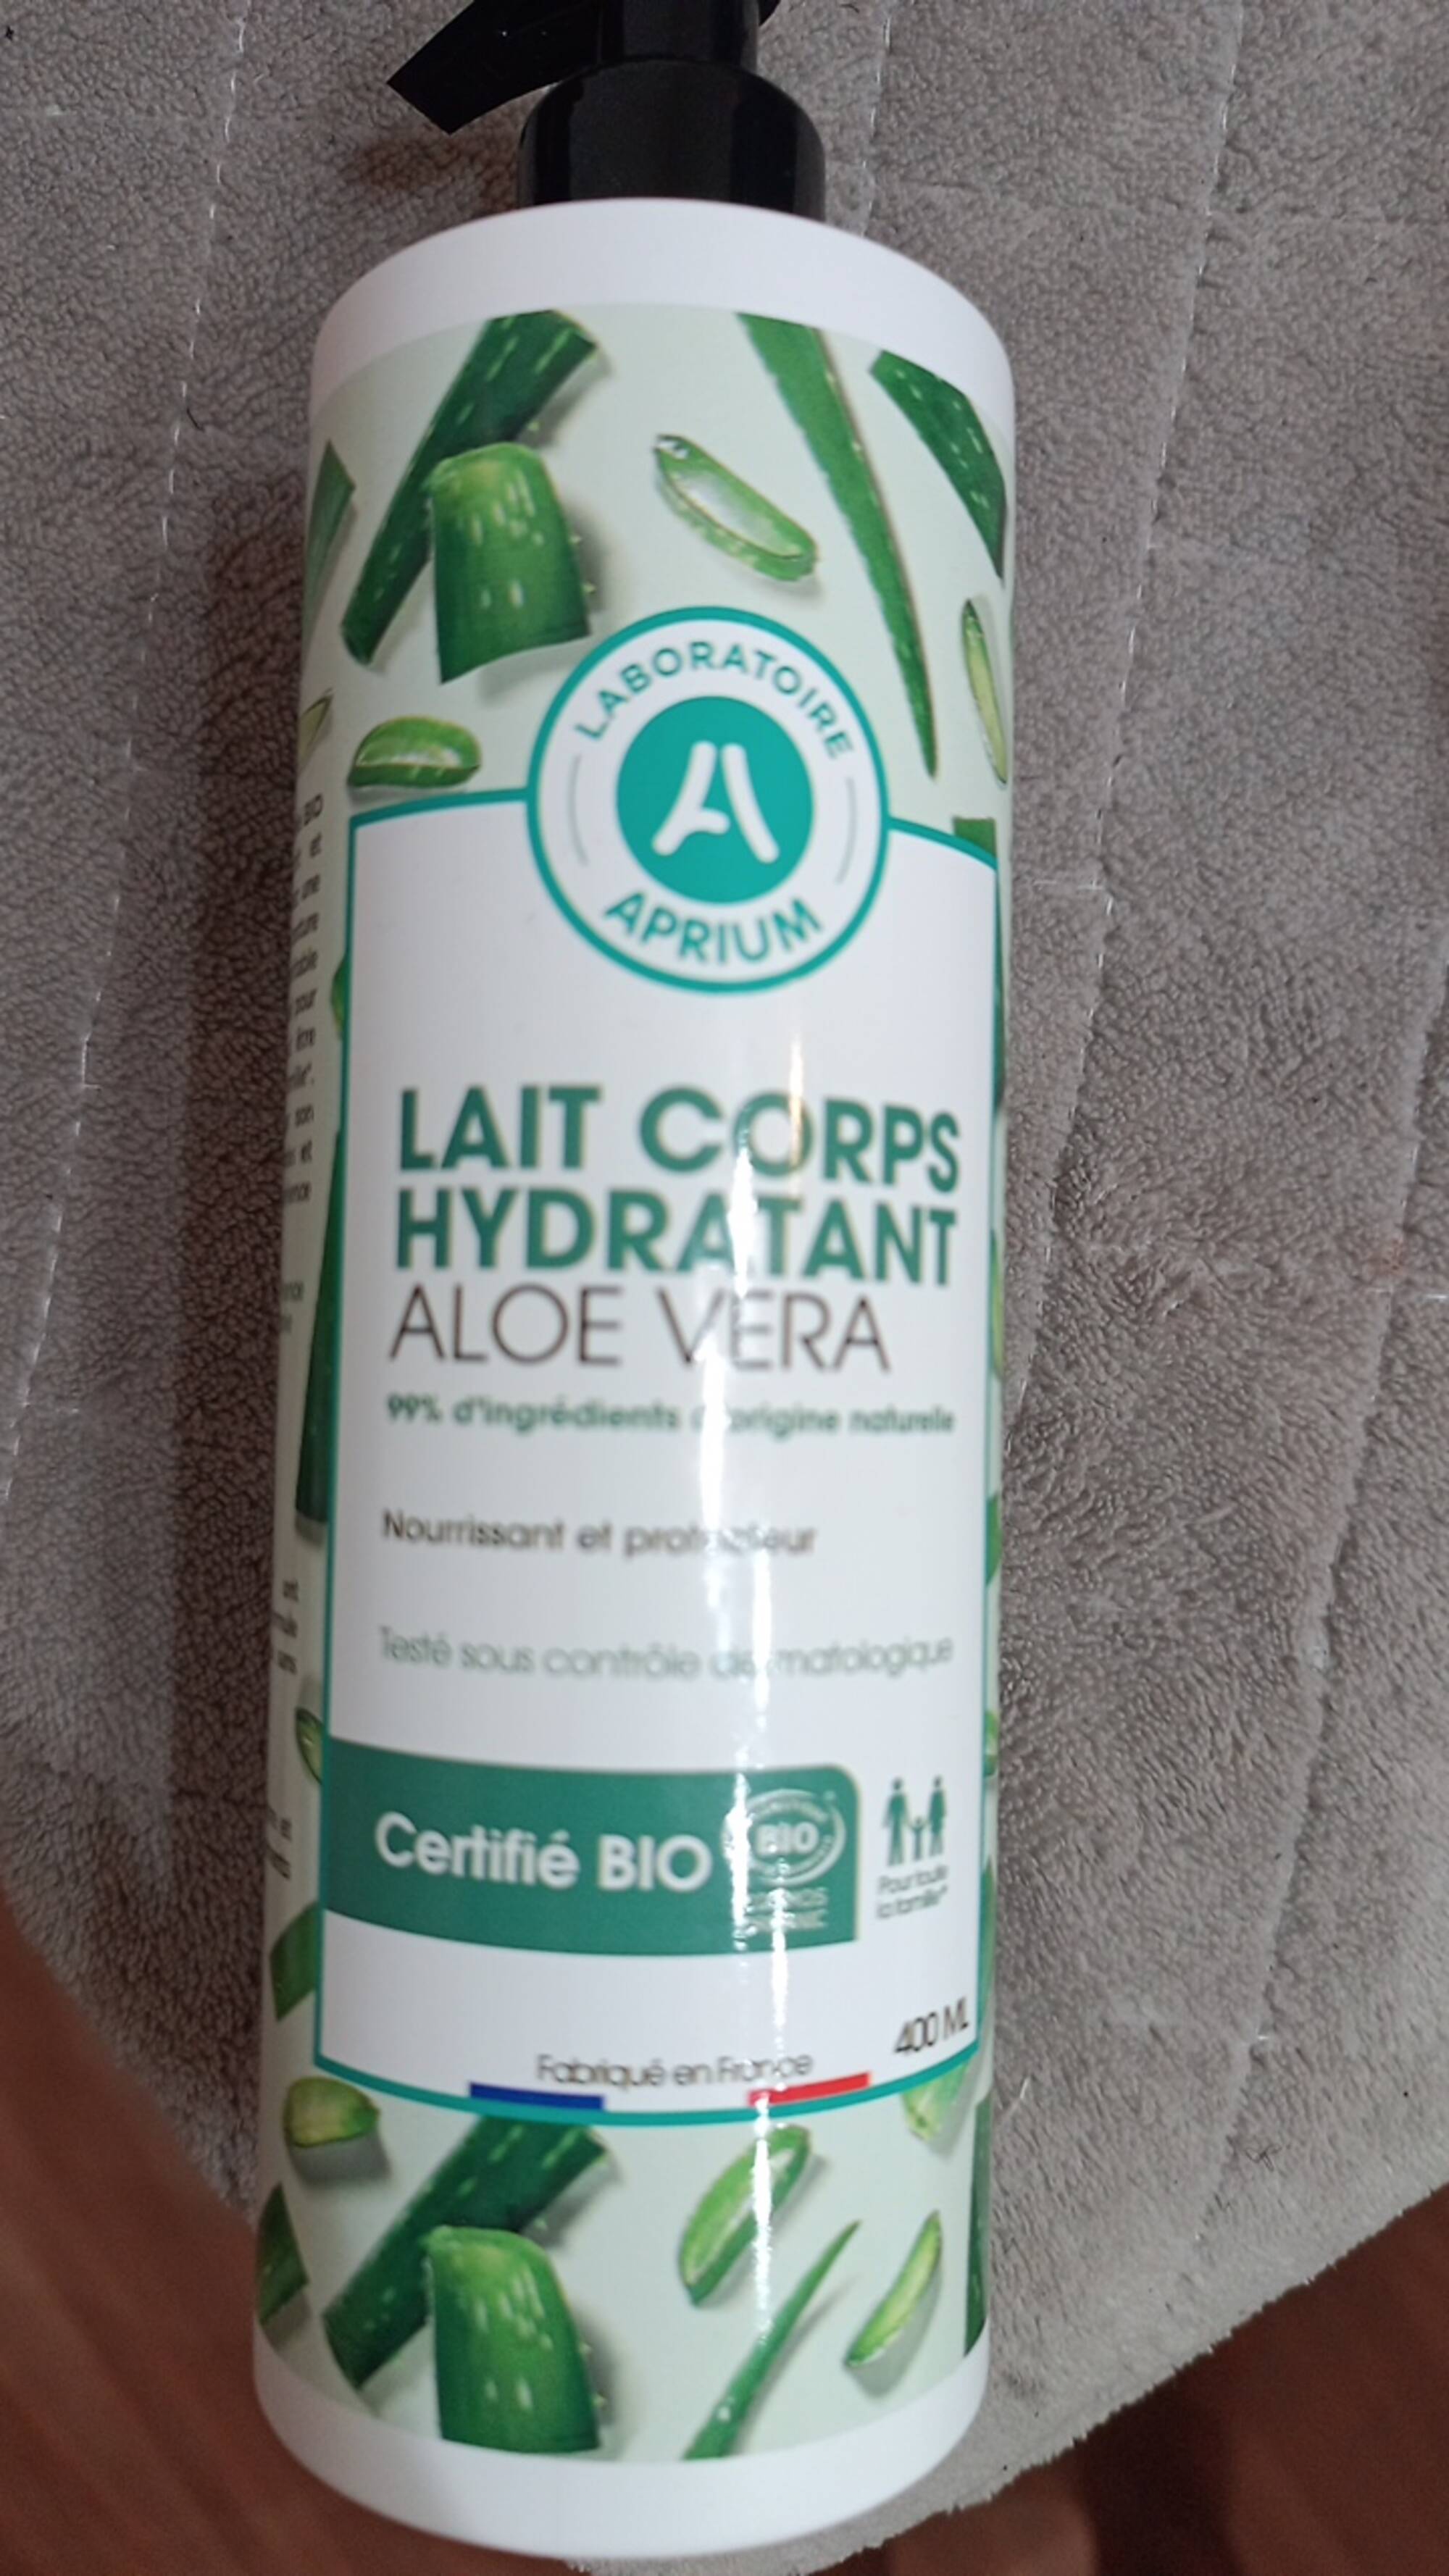 APRIUM - Lait corps hydratant aloe vera